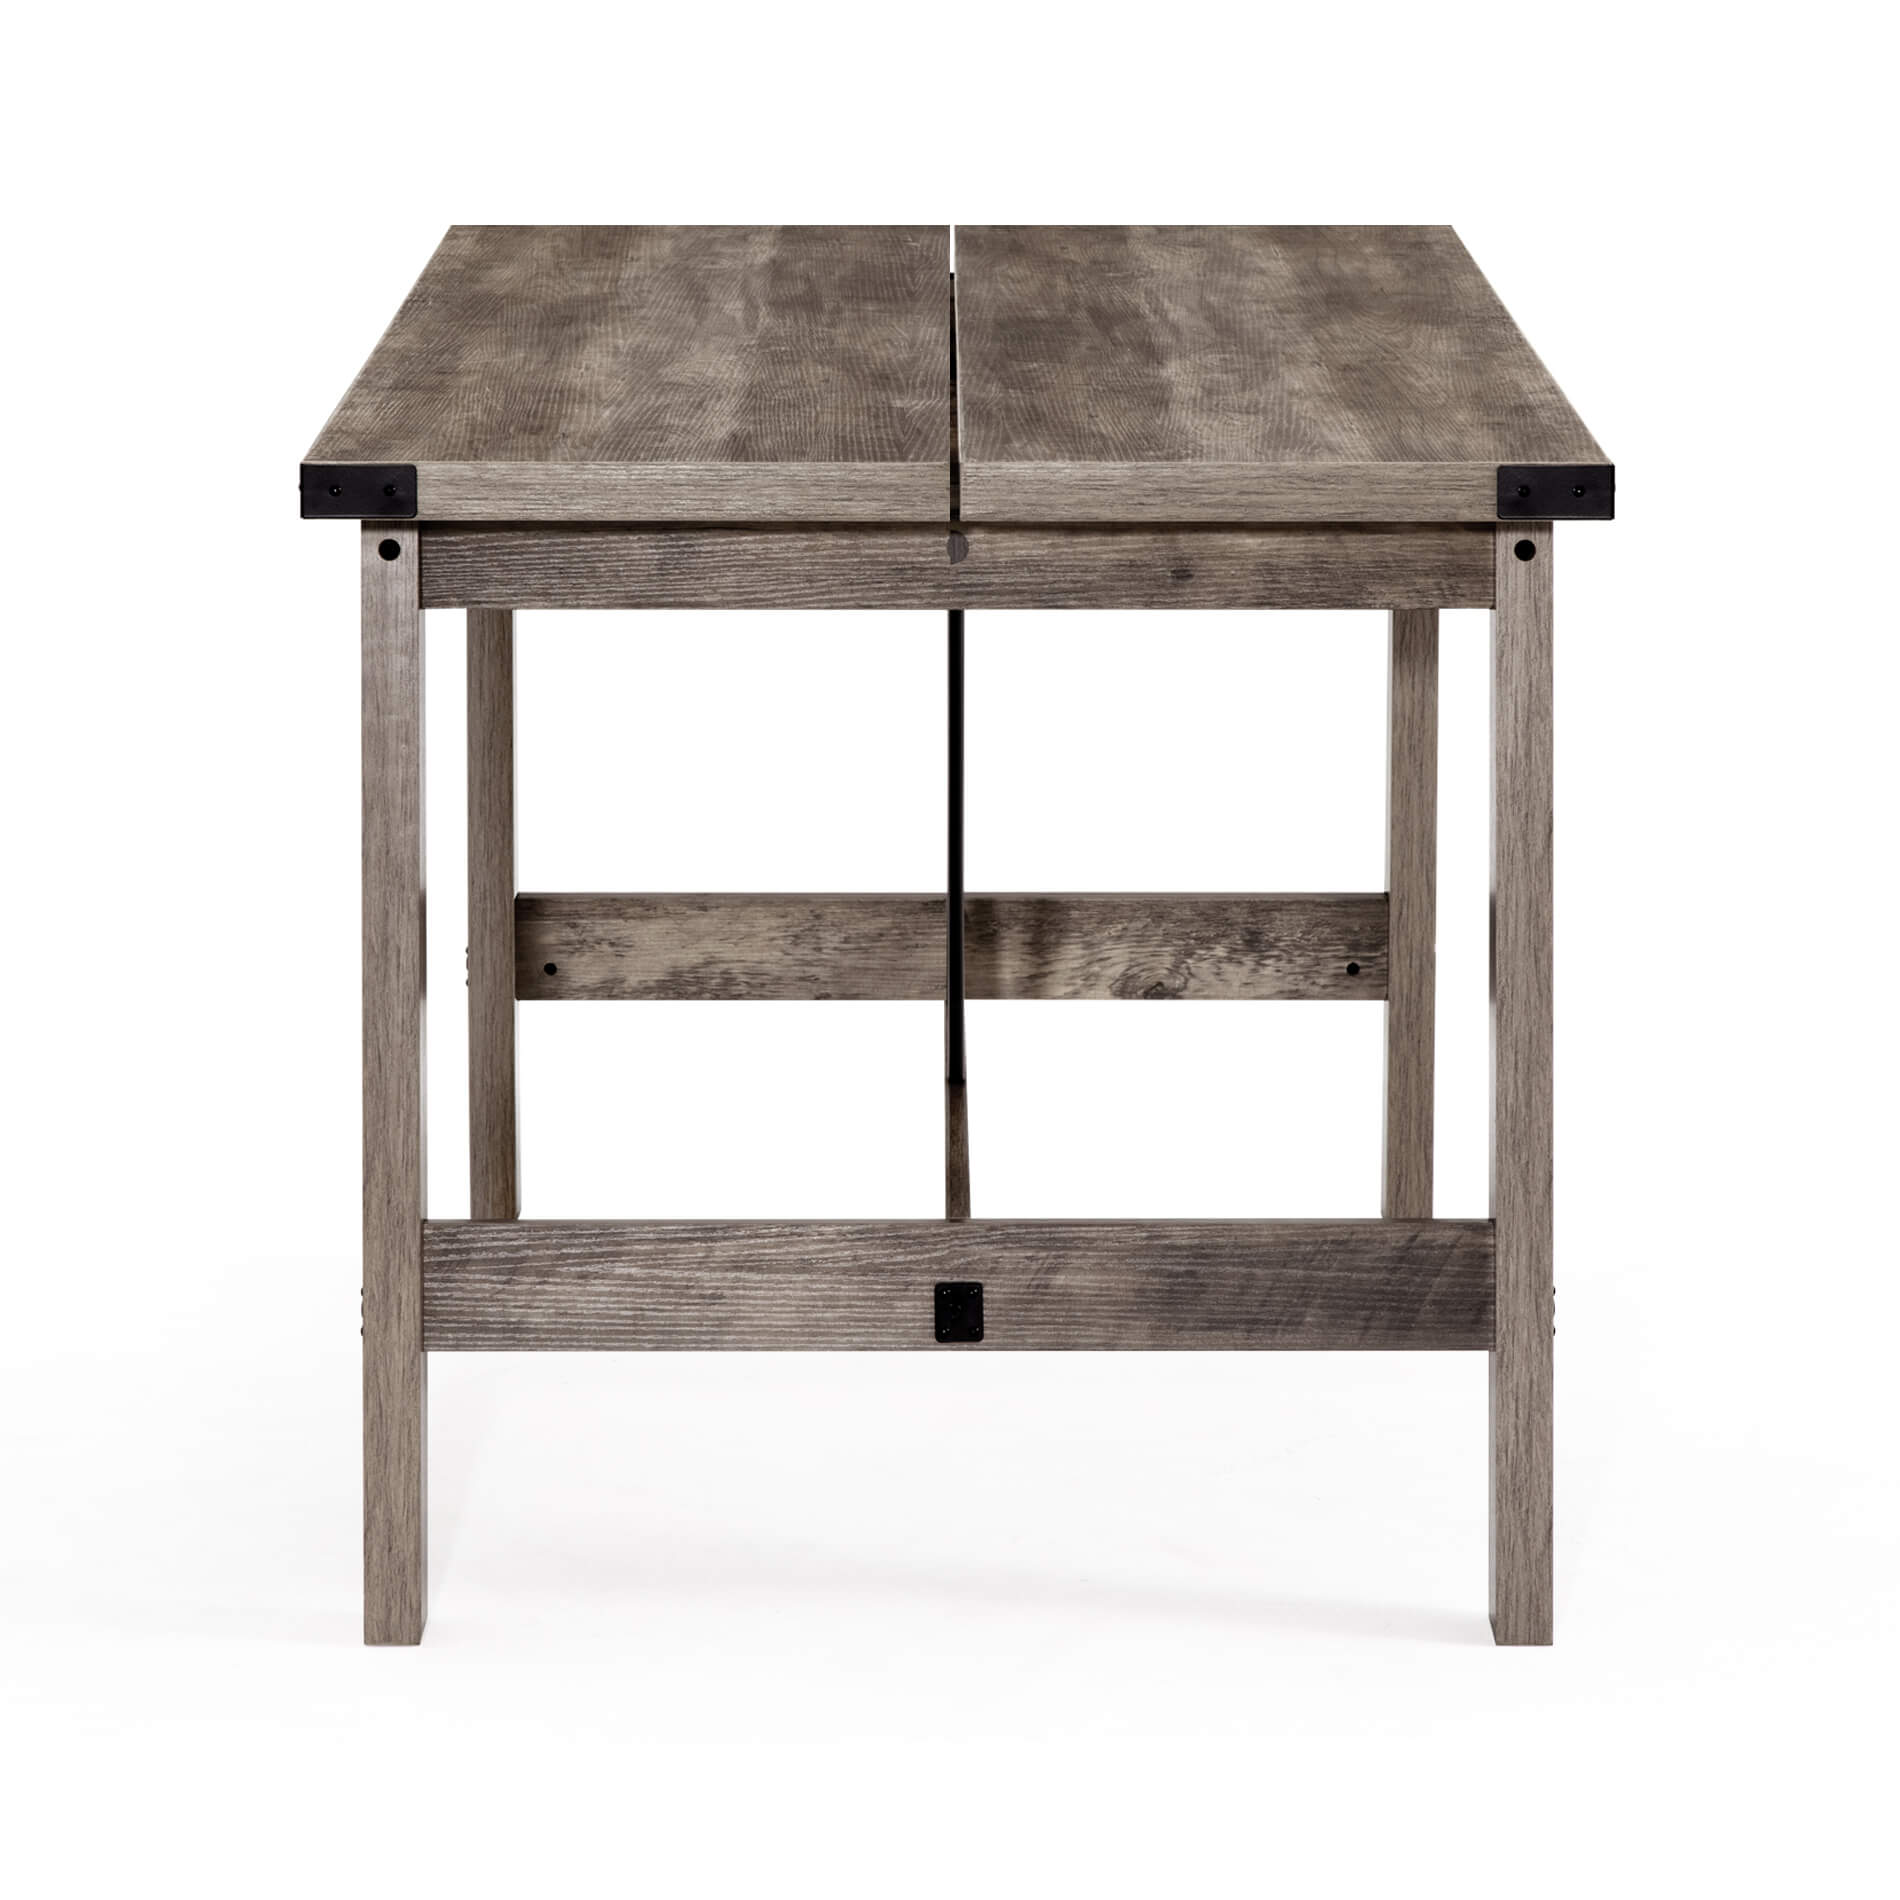 WAMPAT 67.7"  Modern Wood Dining Room Table, Rustic Grey